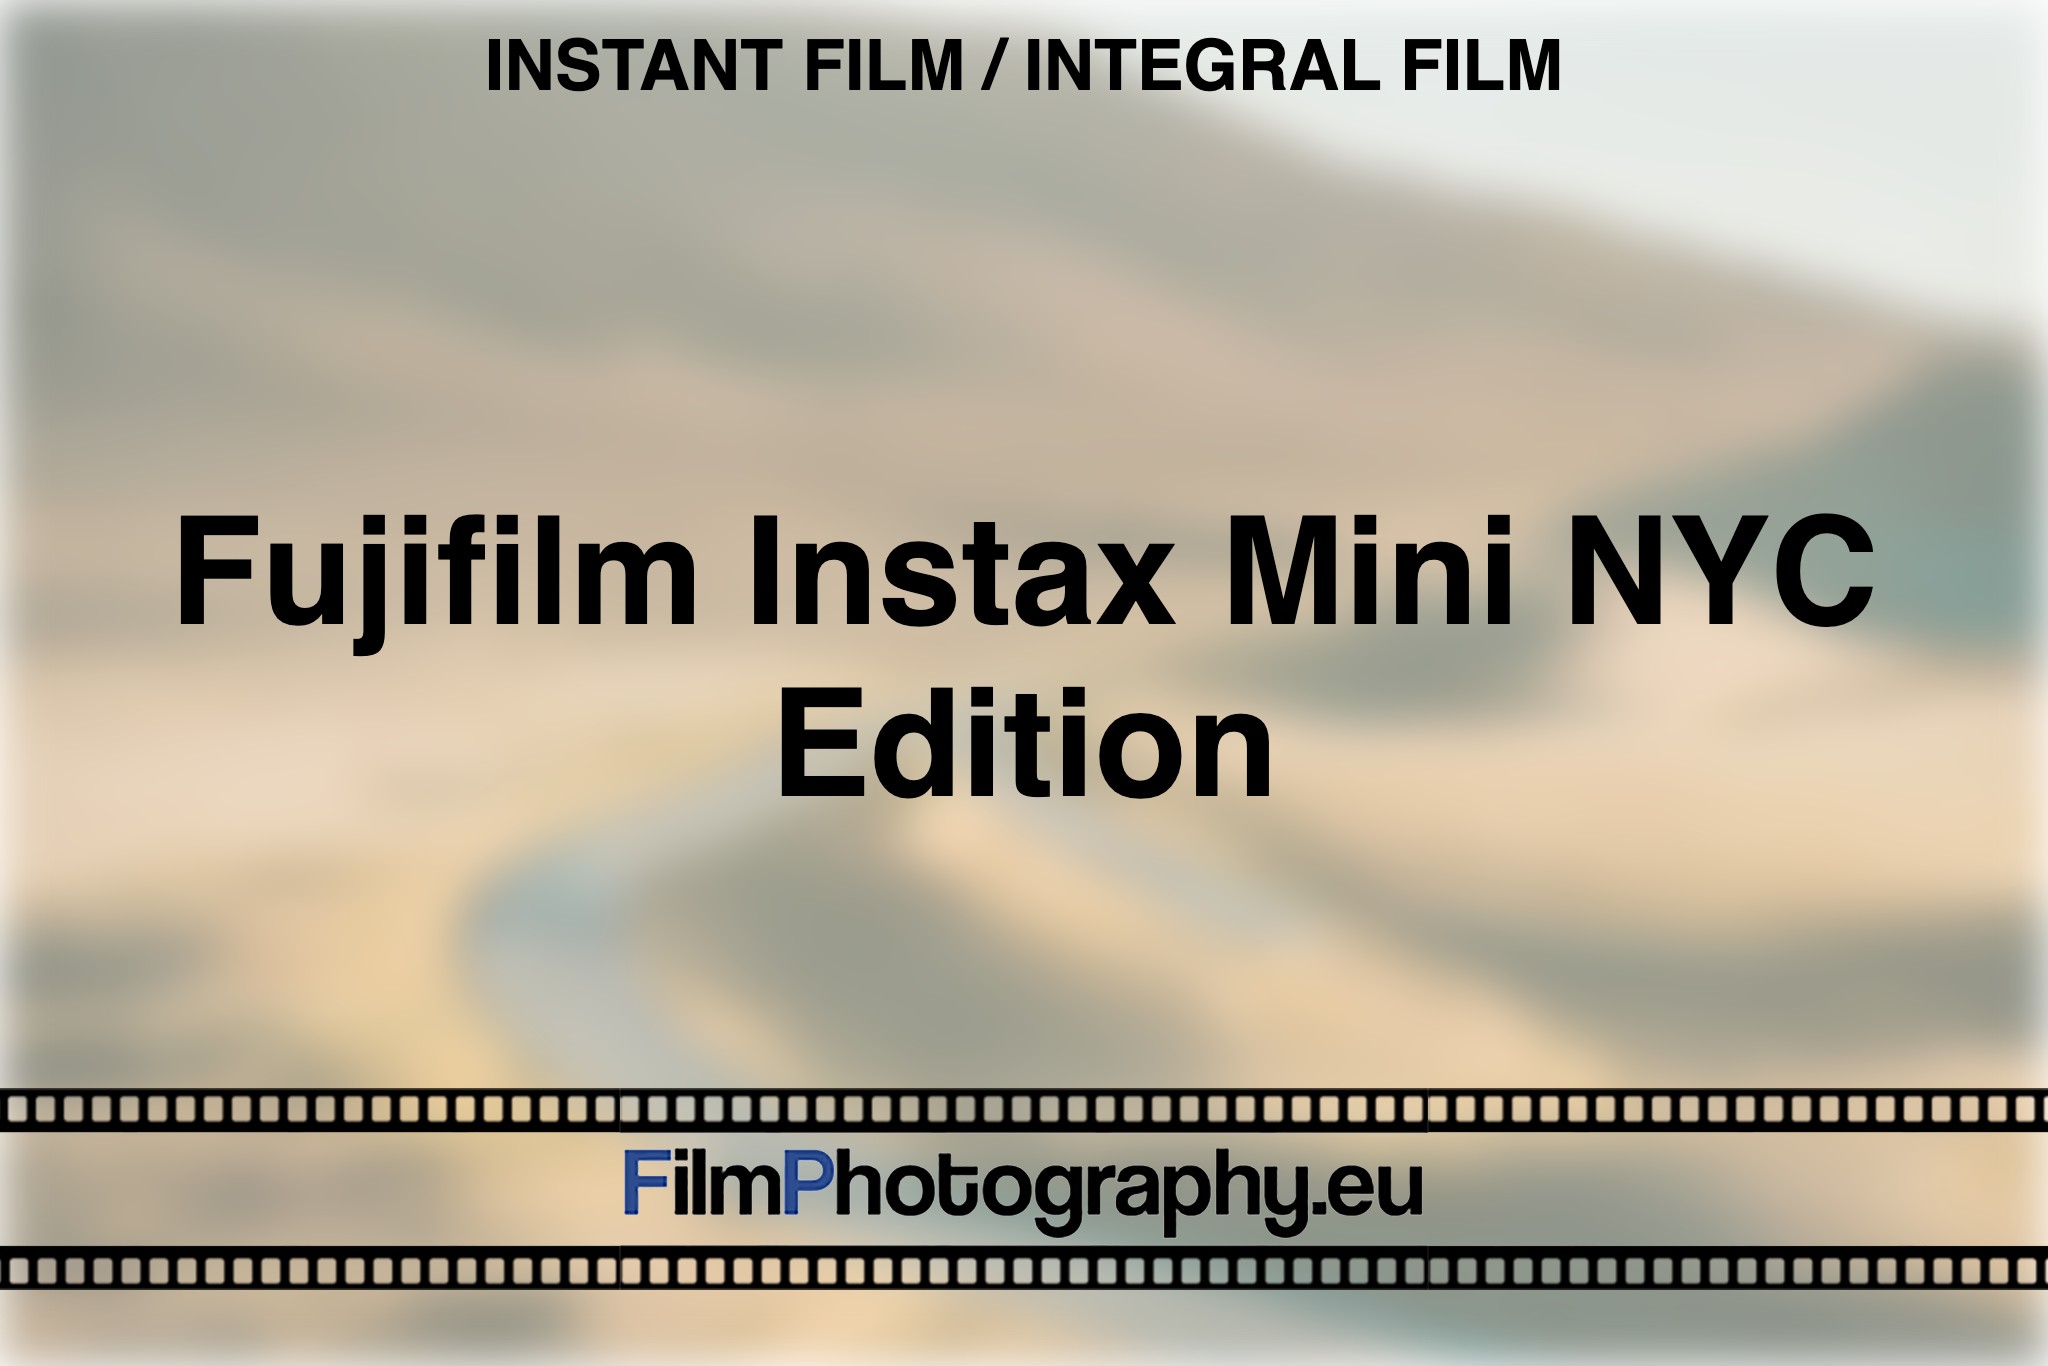 fujifilm-instax-mini-nyc-edition-instant-film-integral-film-bnv